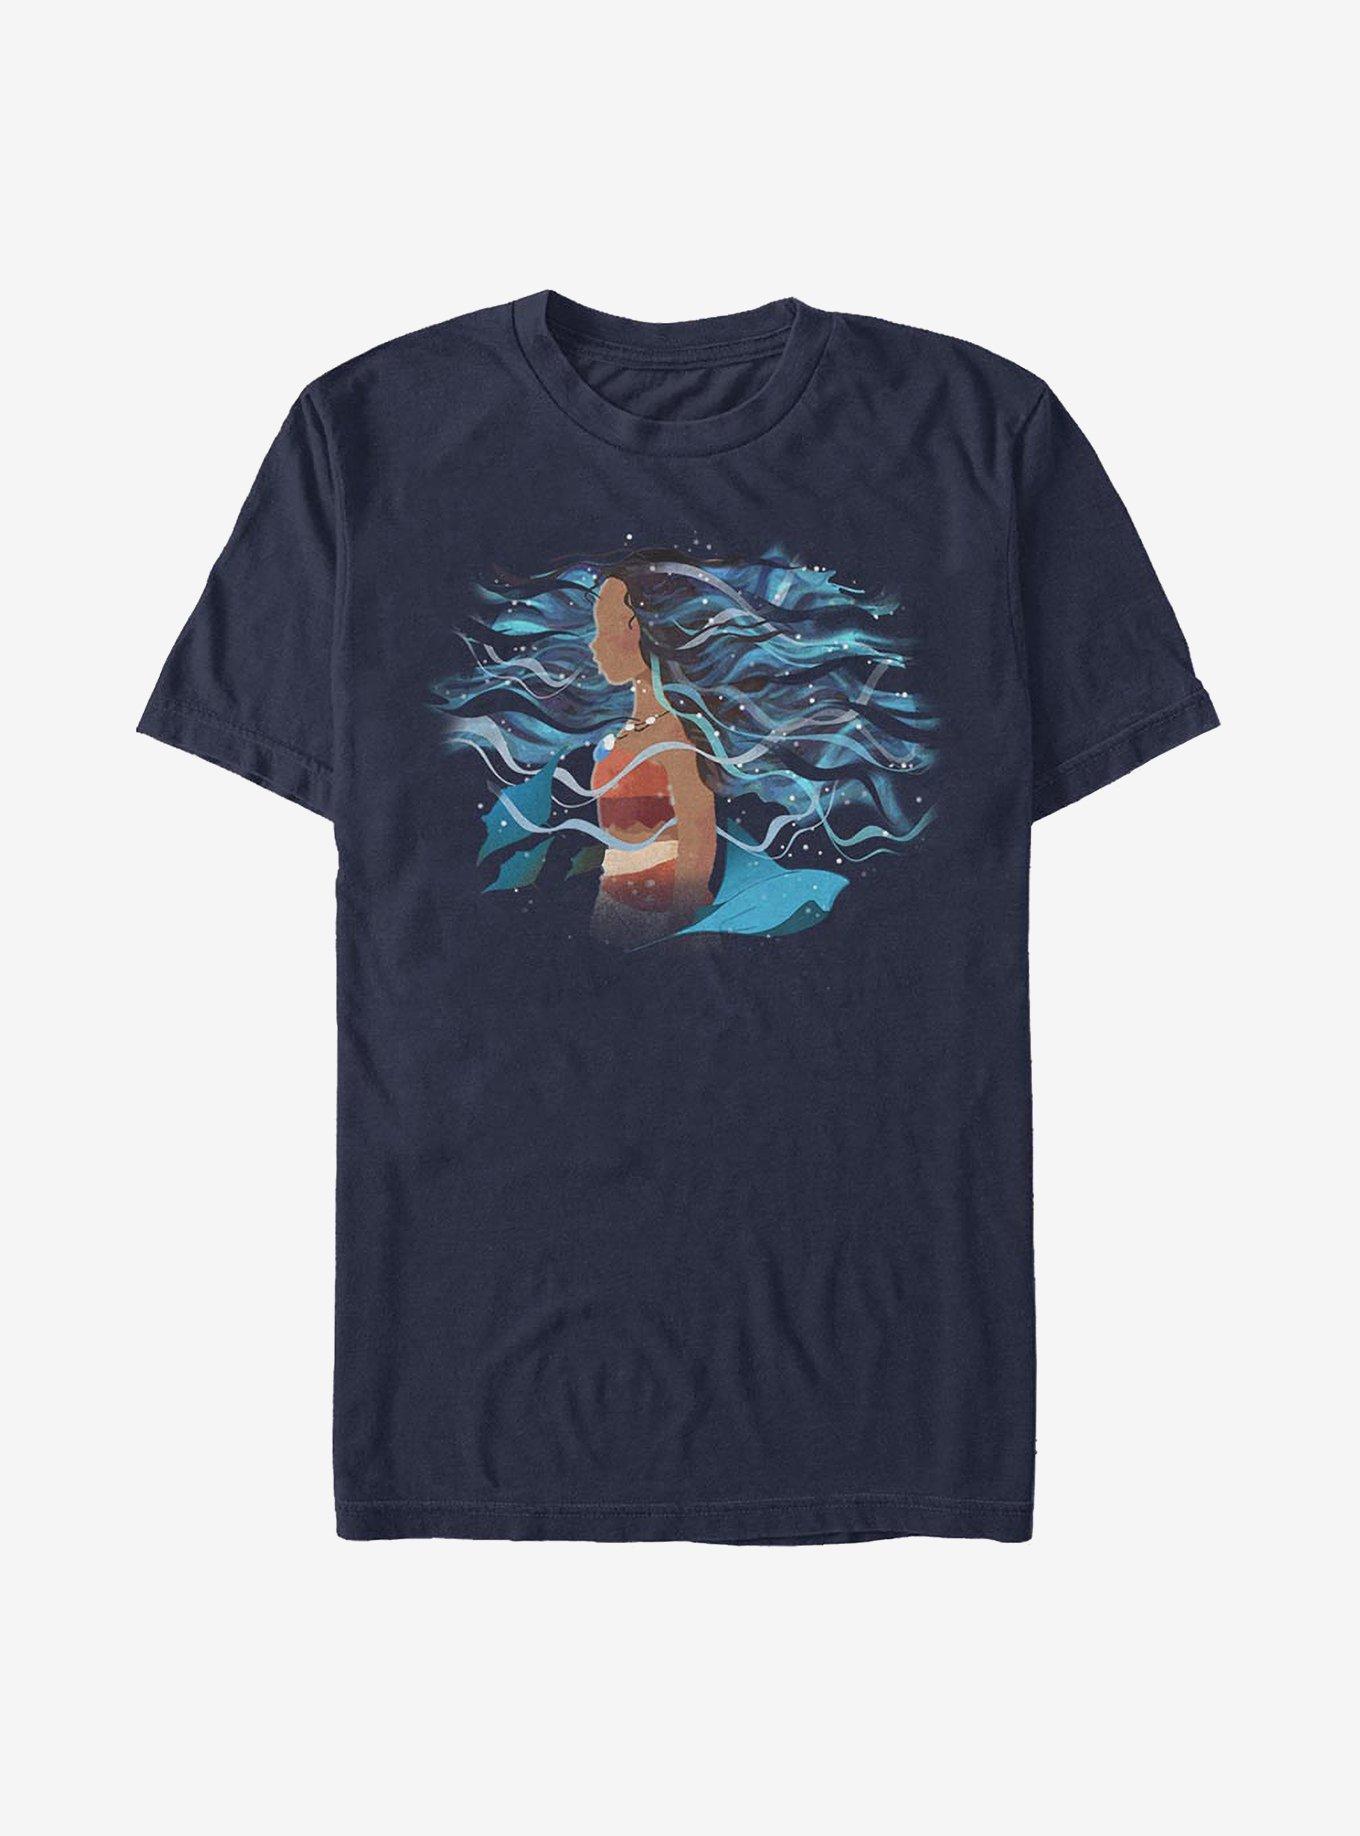 Disney Moana In The Ocean T-Shirt, NAVY, hi-res